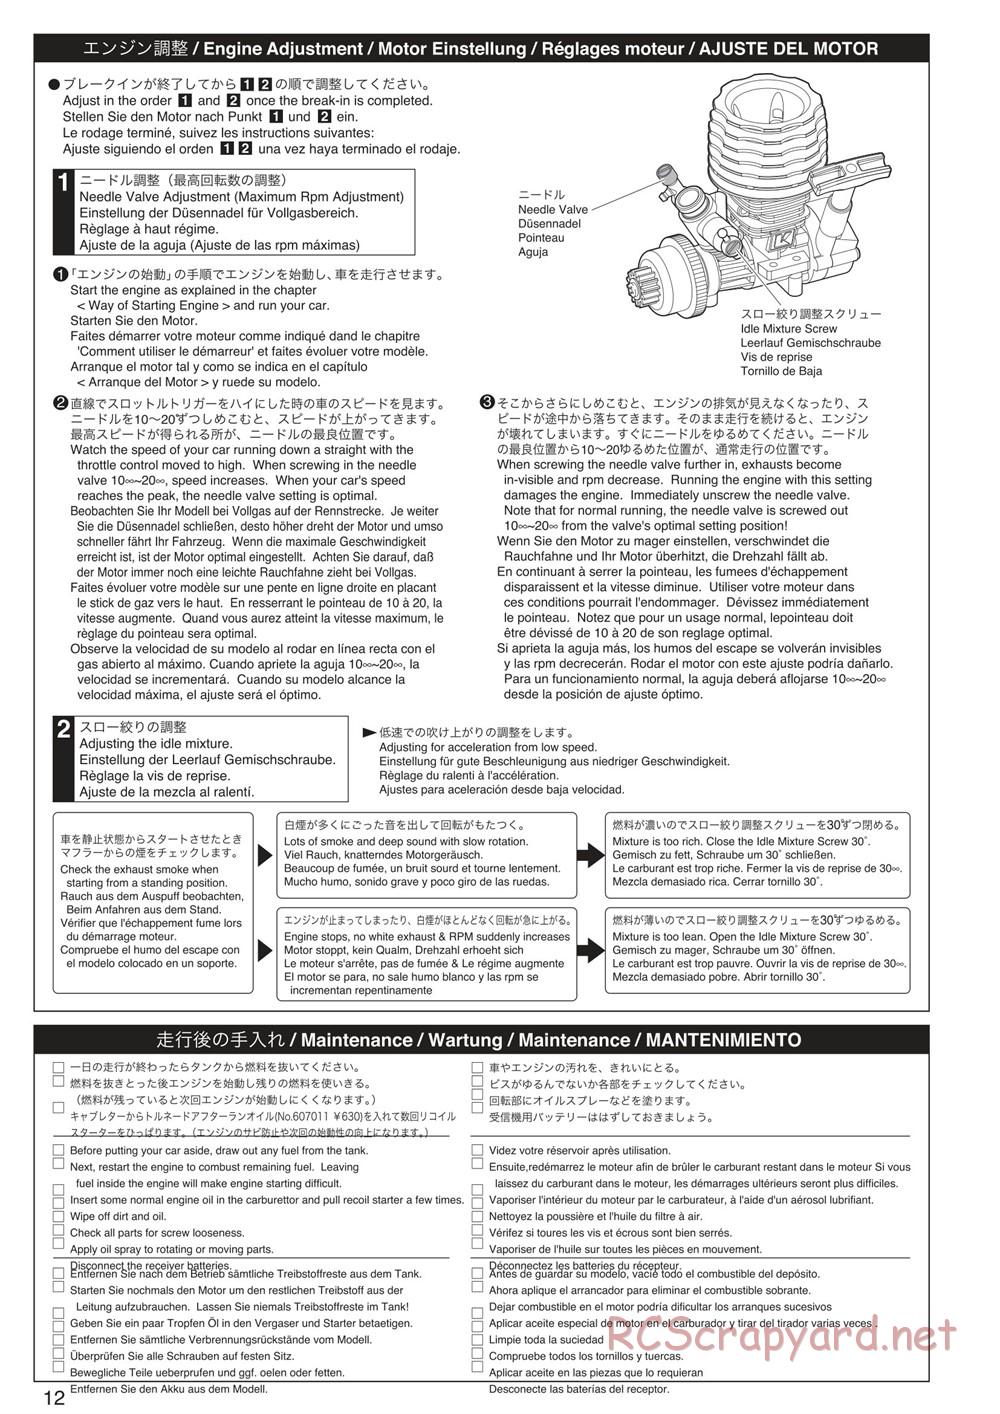 Kyosho - DRT - Manual - Page 12